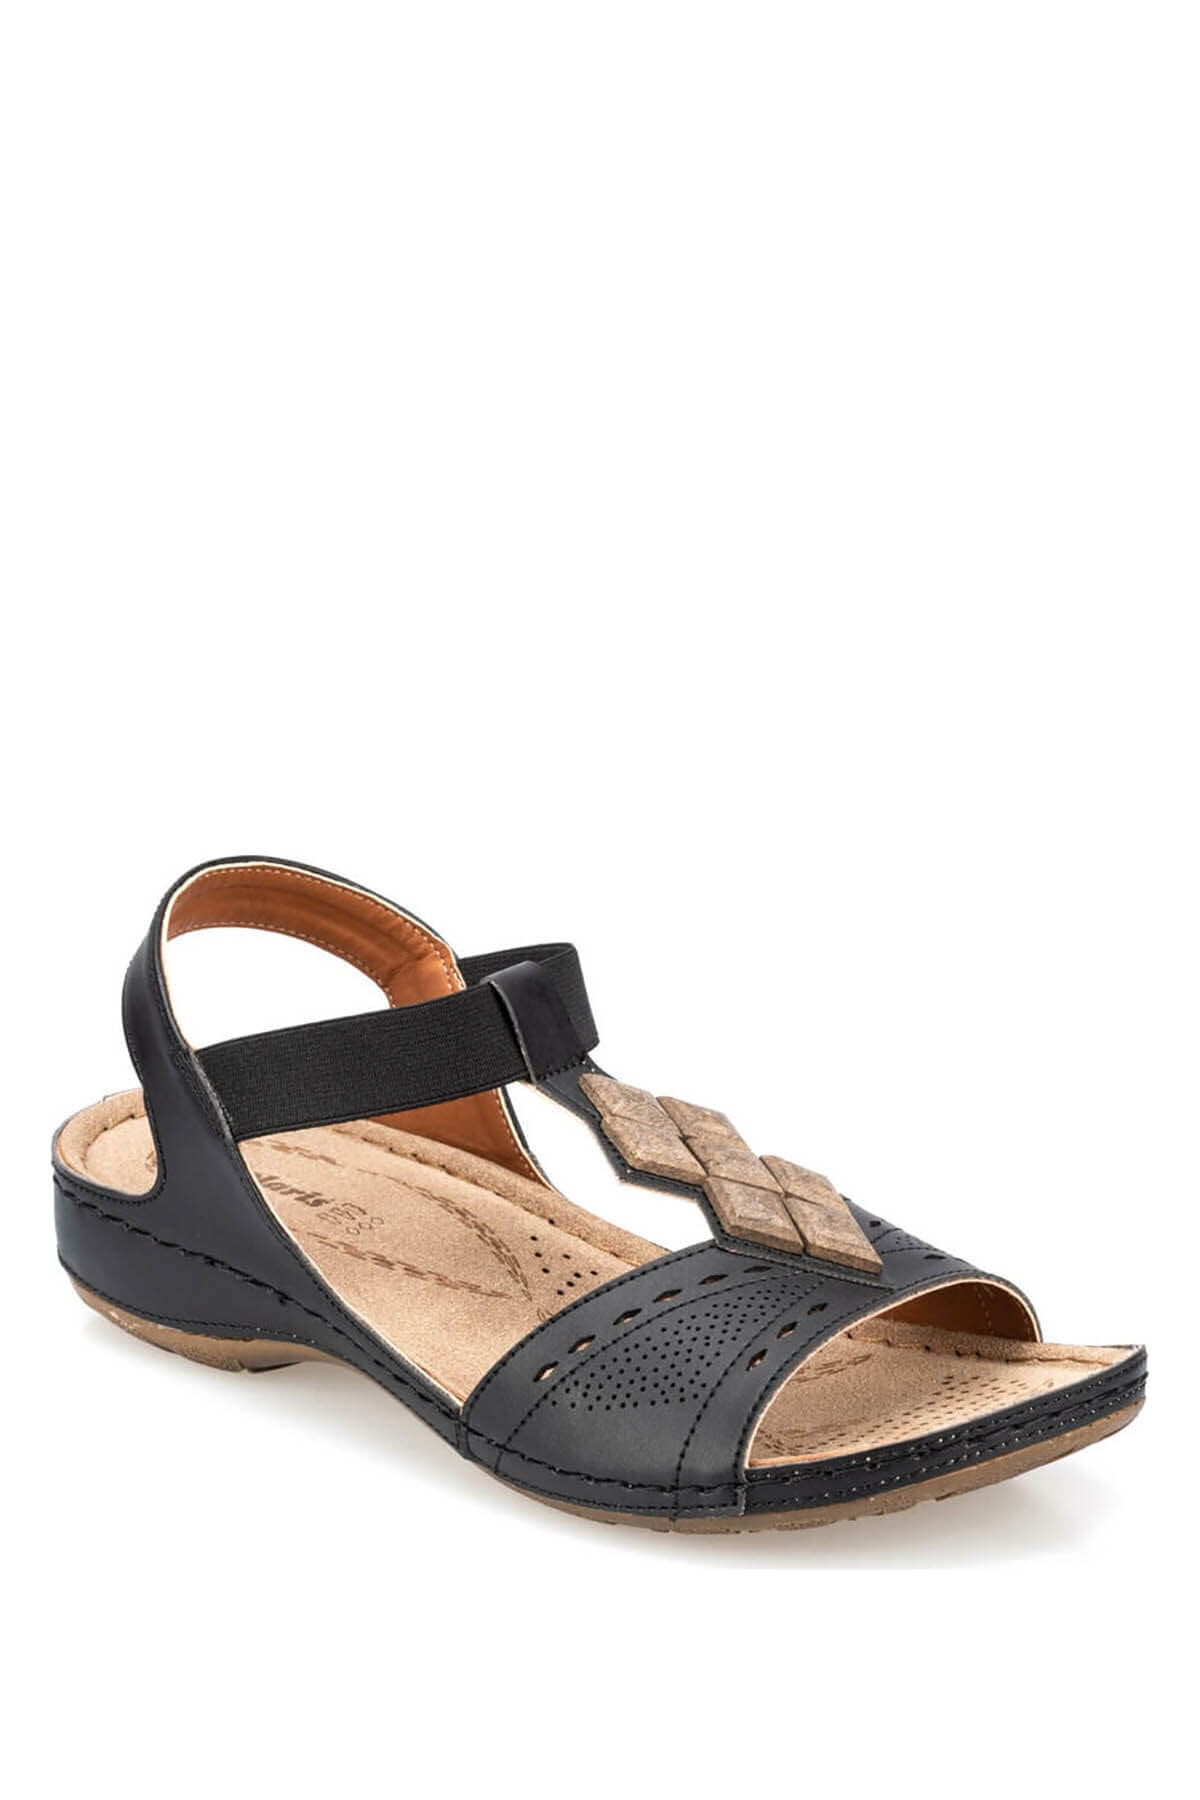 Polaris 91.157364.z Women's Sandals